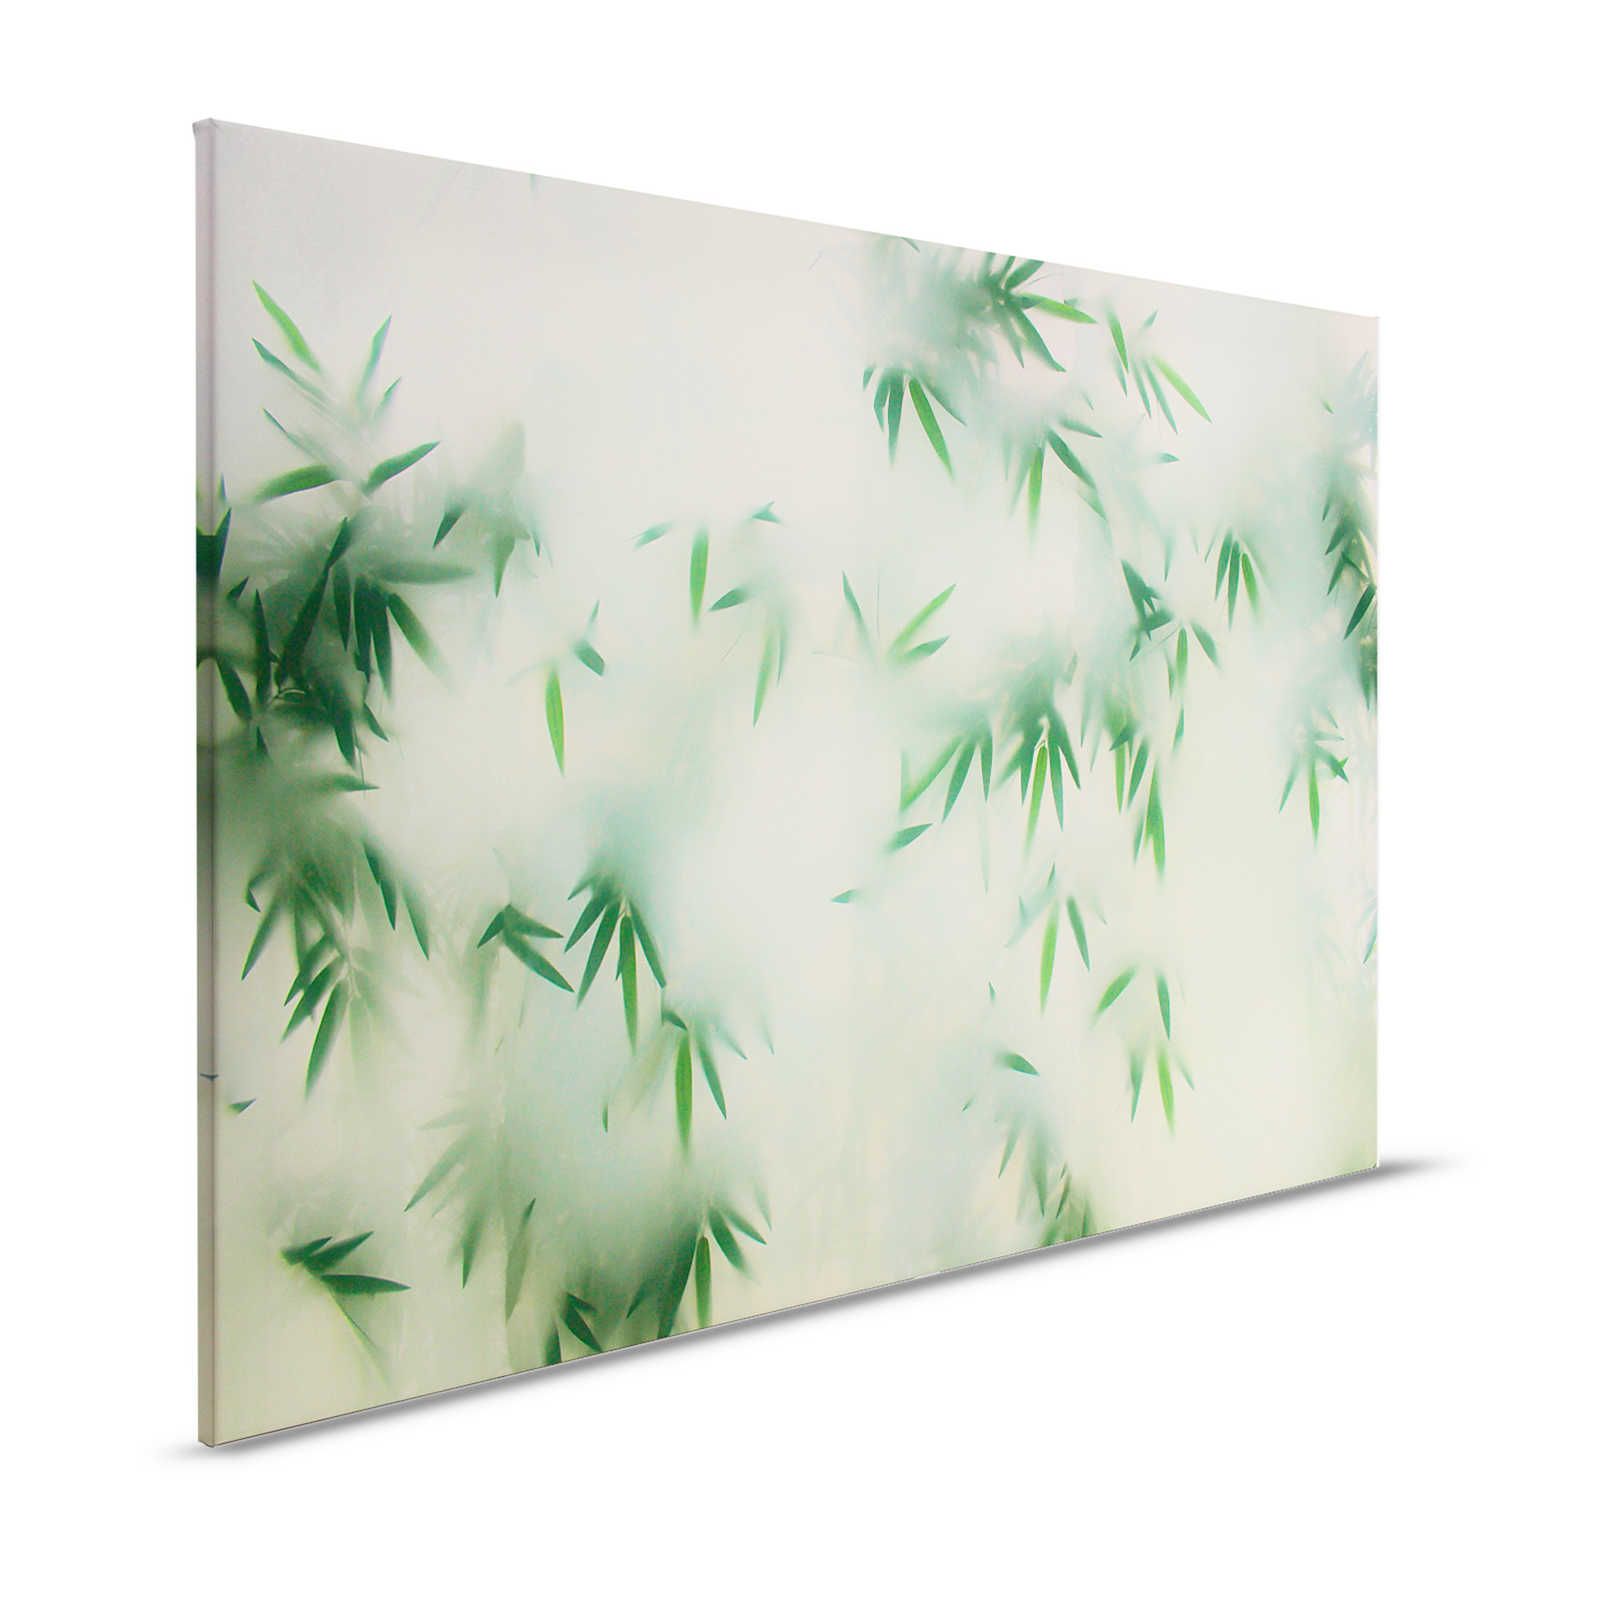 Panda Paradise 2 - Lienzo bambú verde en la niebla - 1,20 m x 0,80 m
